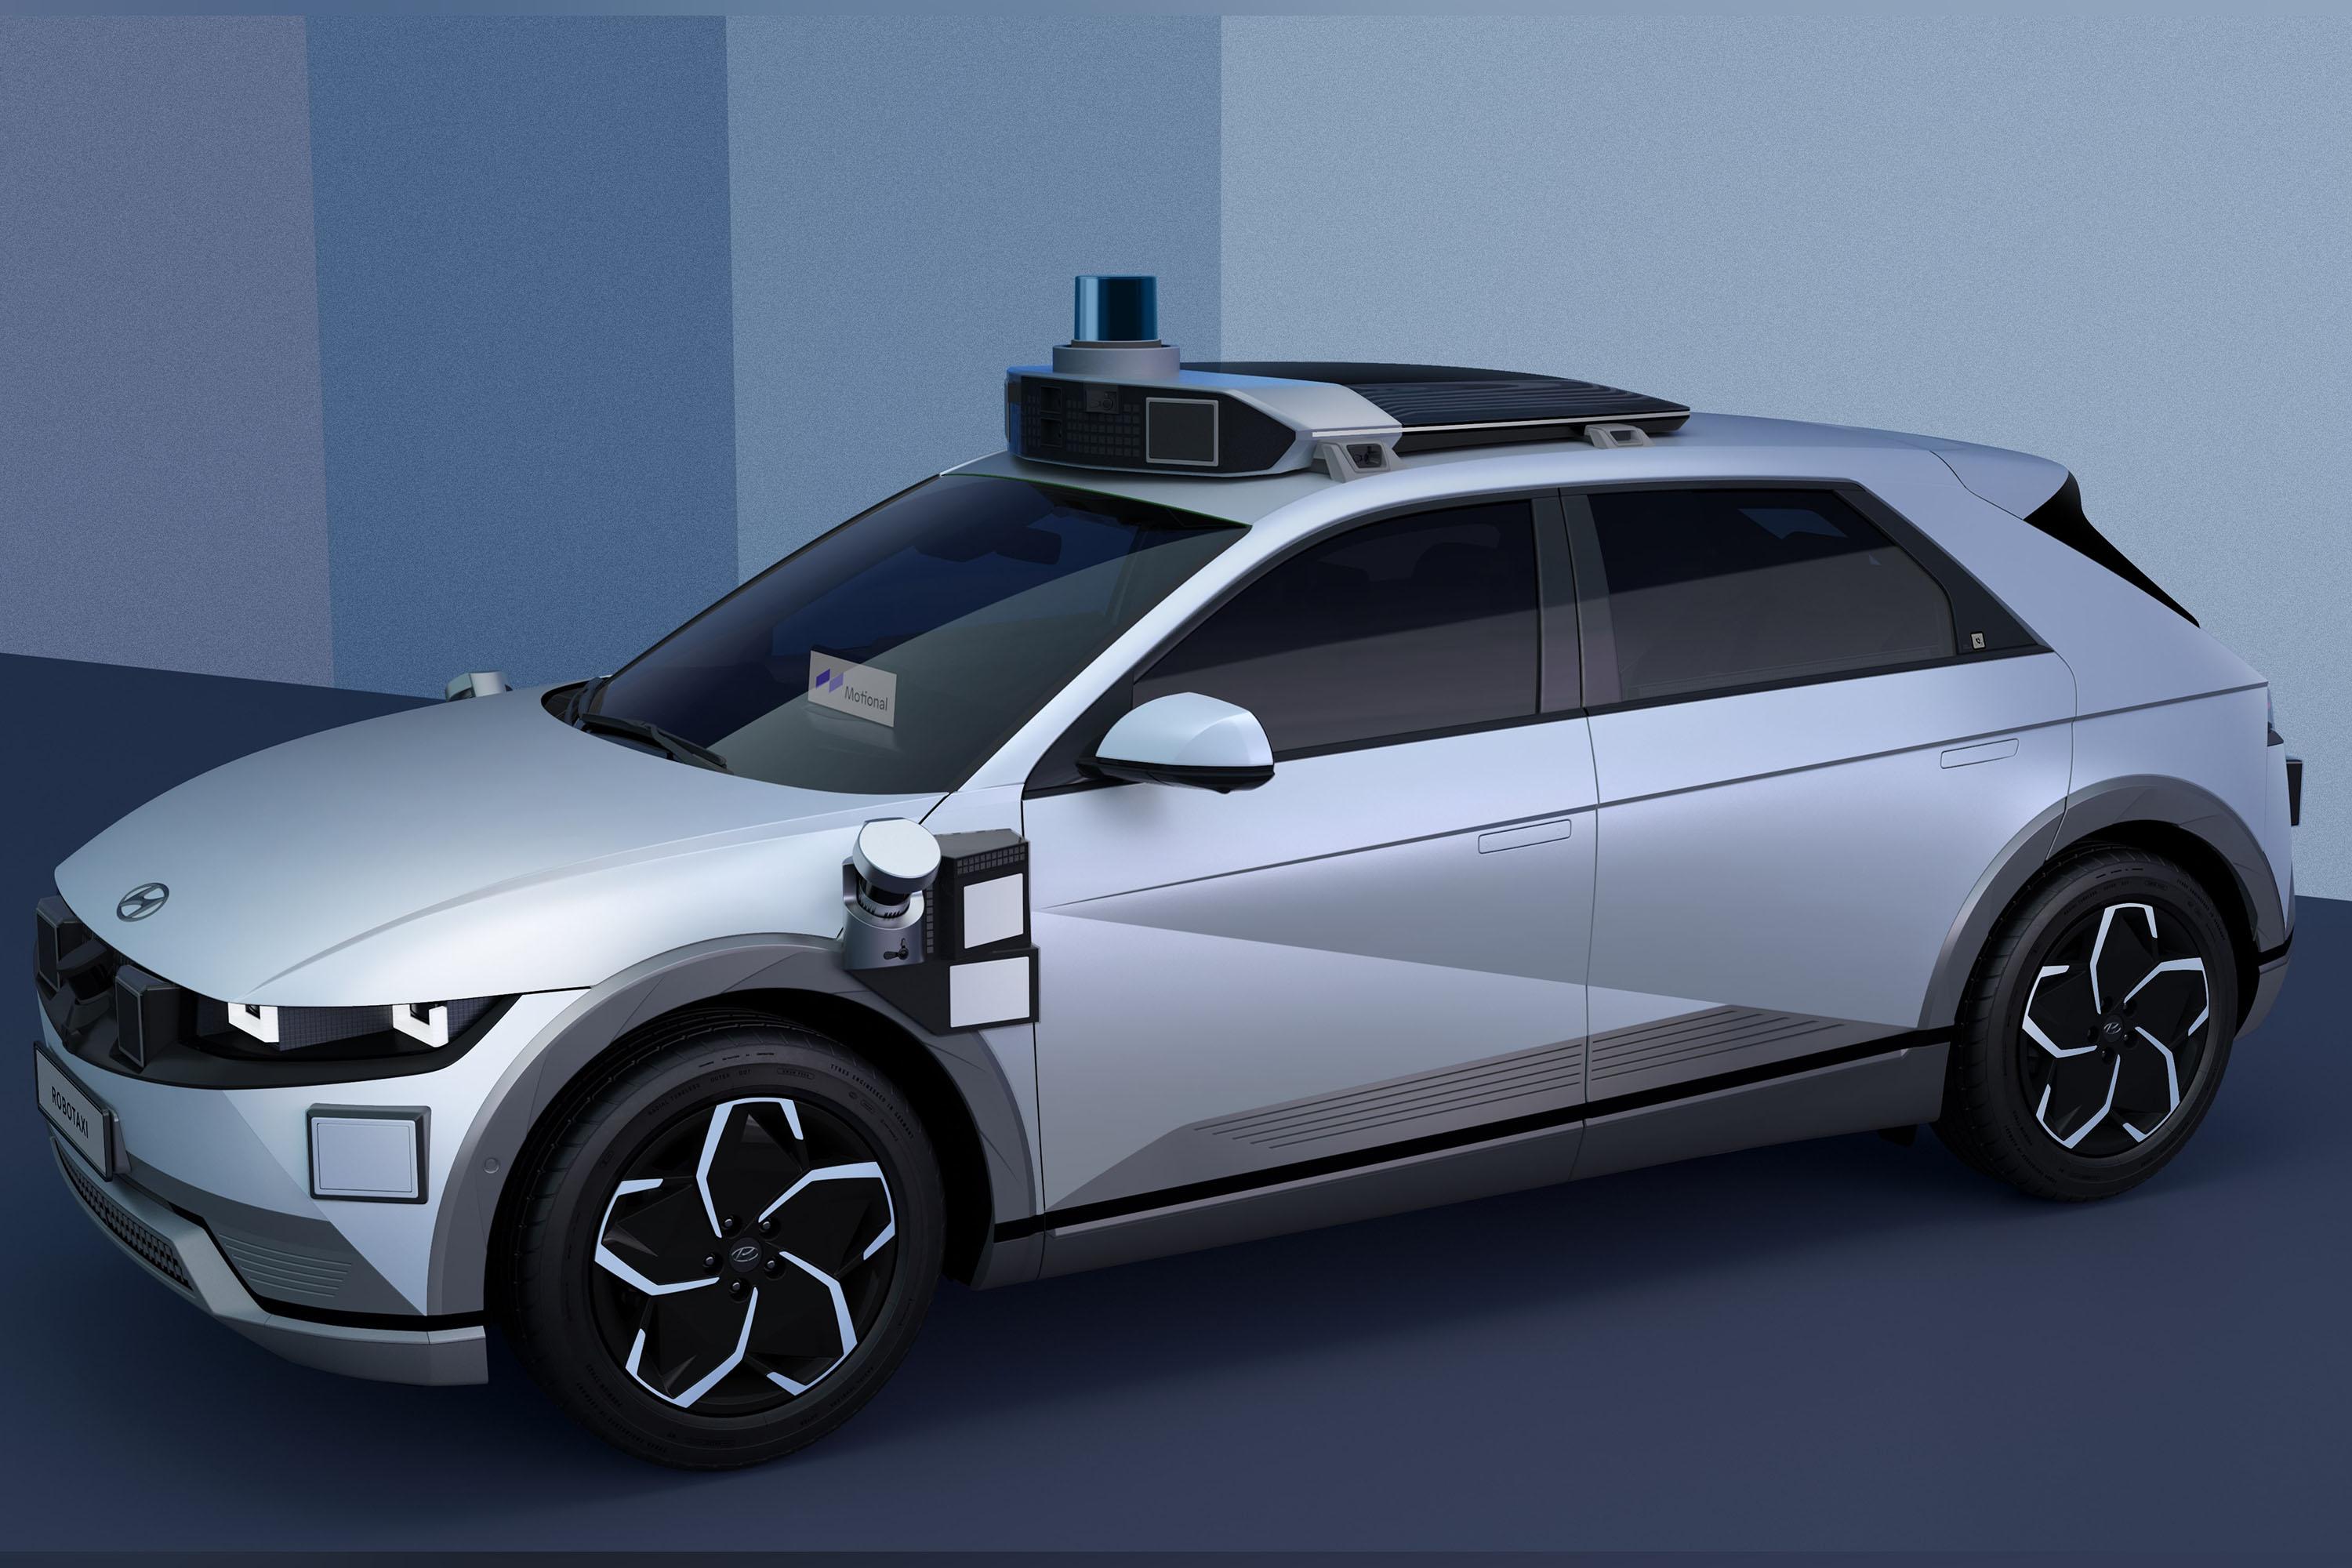 Motional to launch self-driving Hyundai Ioniq 5 taxi in 2023